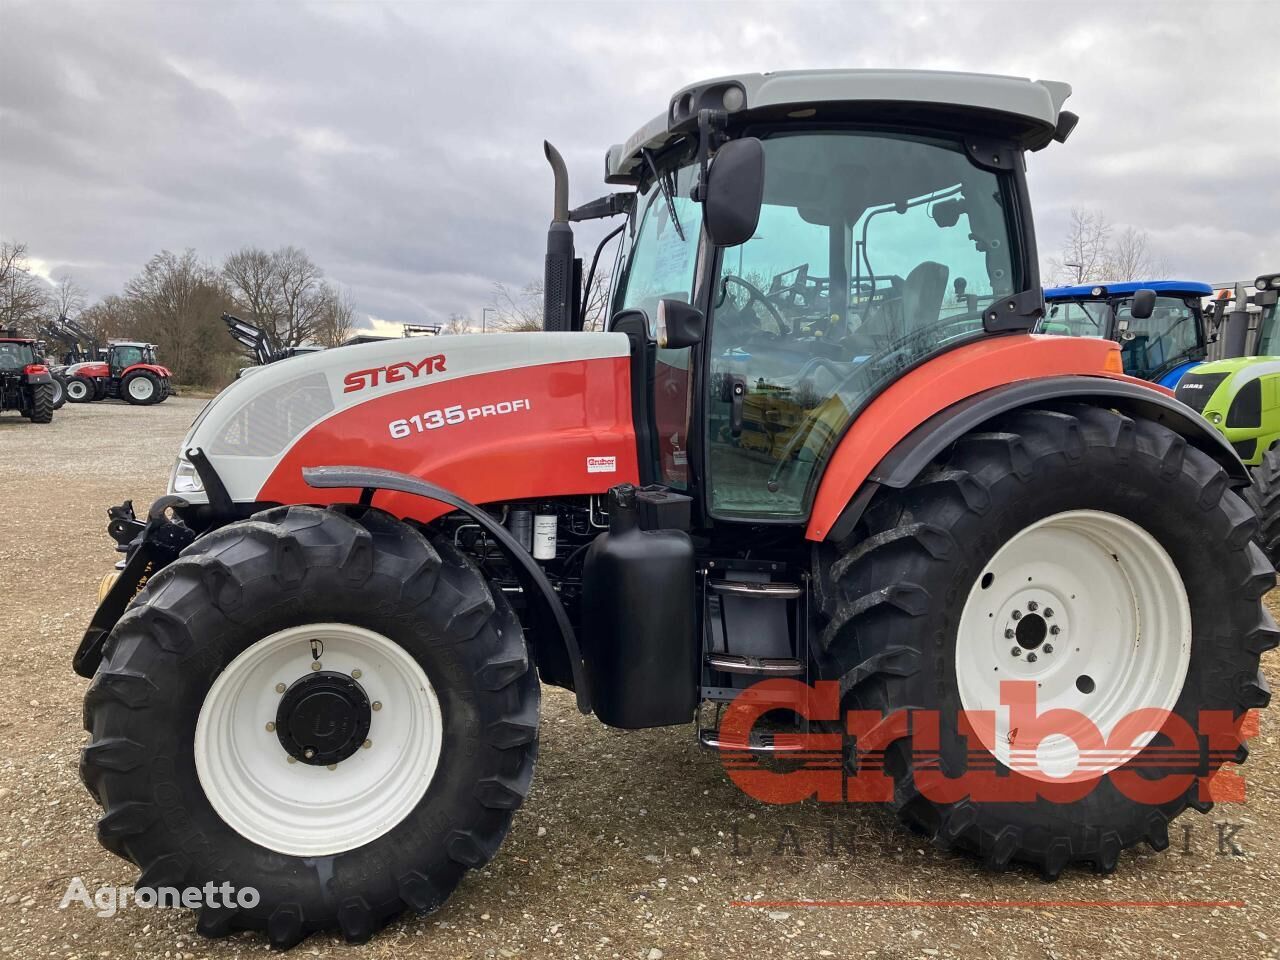 Steyr Profi 6135 wheel tractor